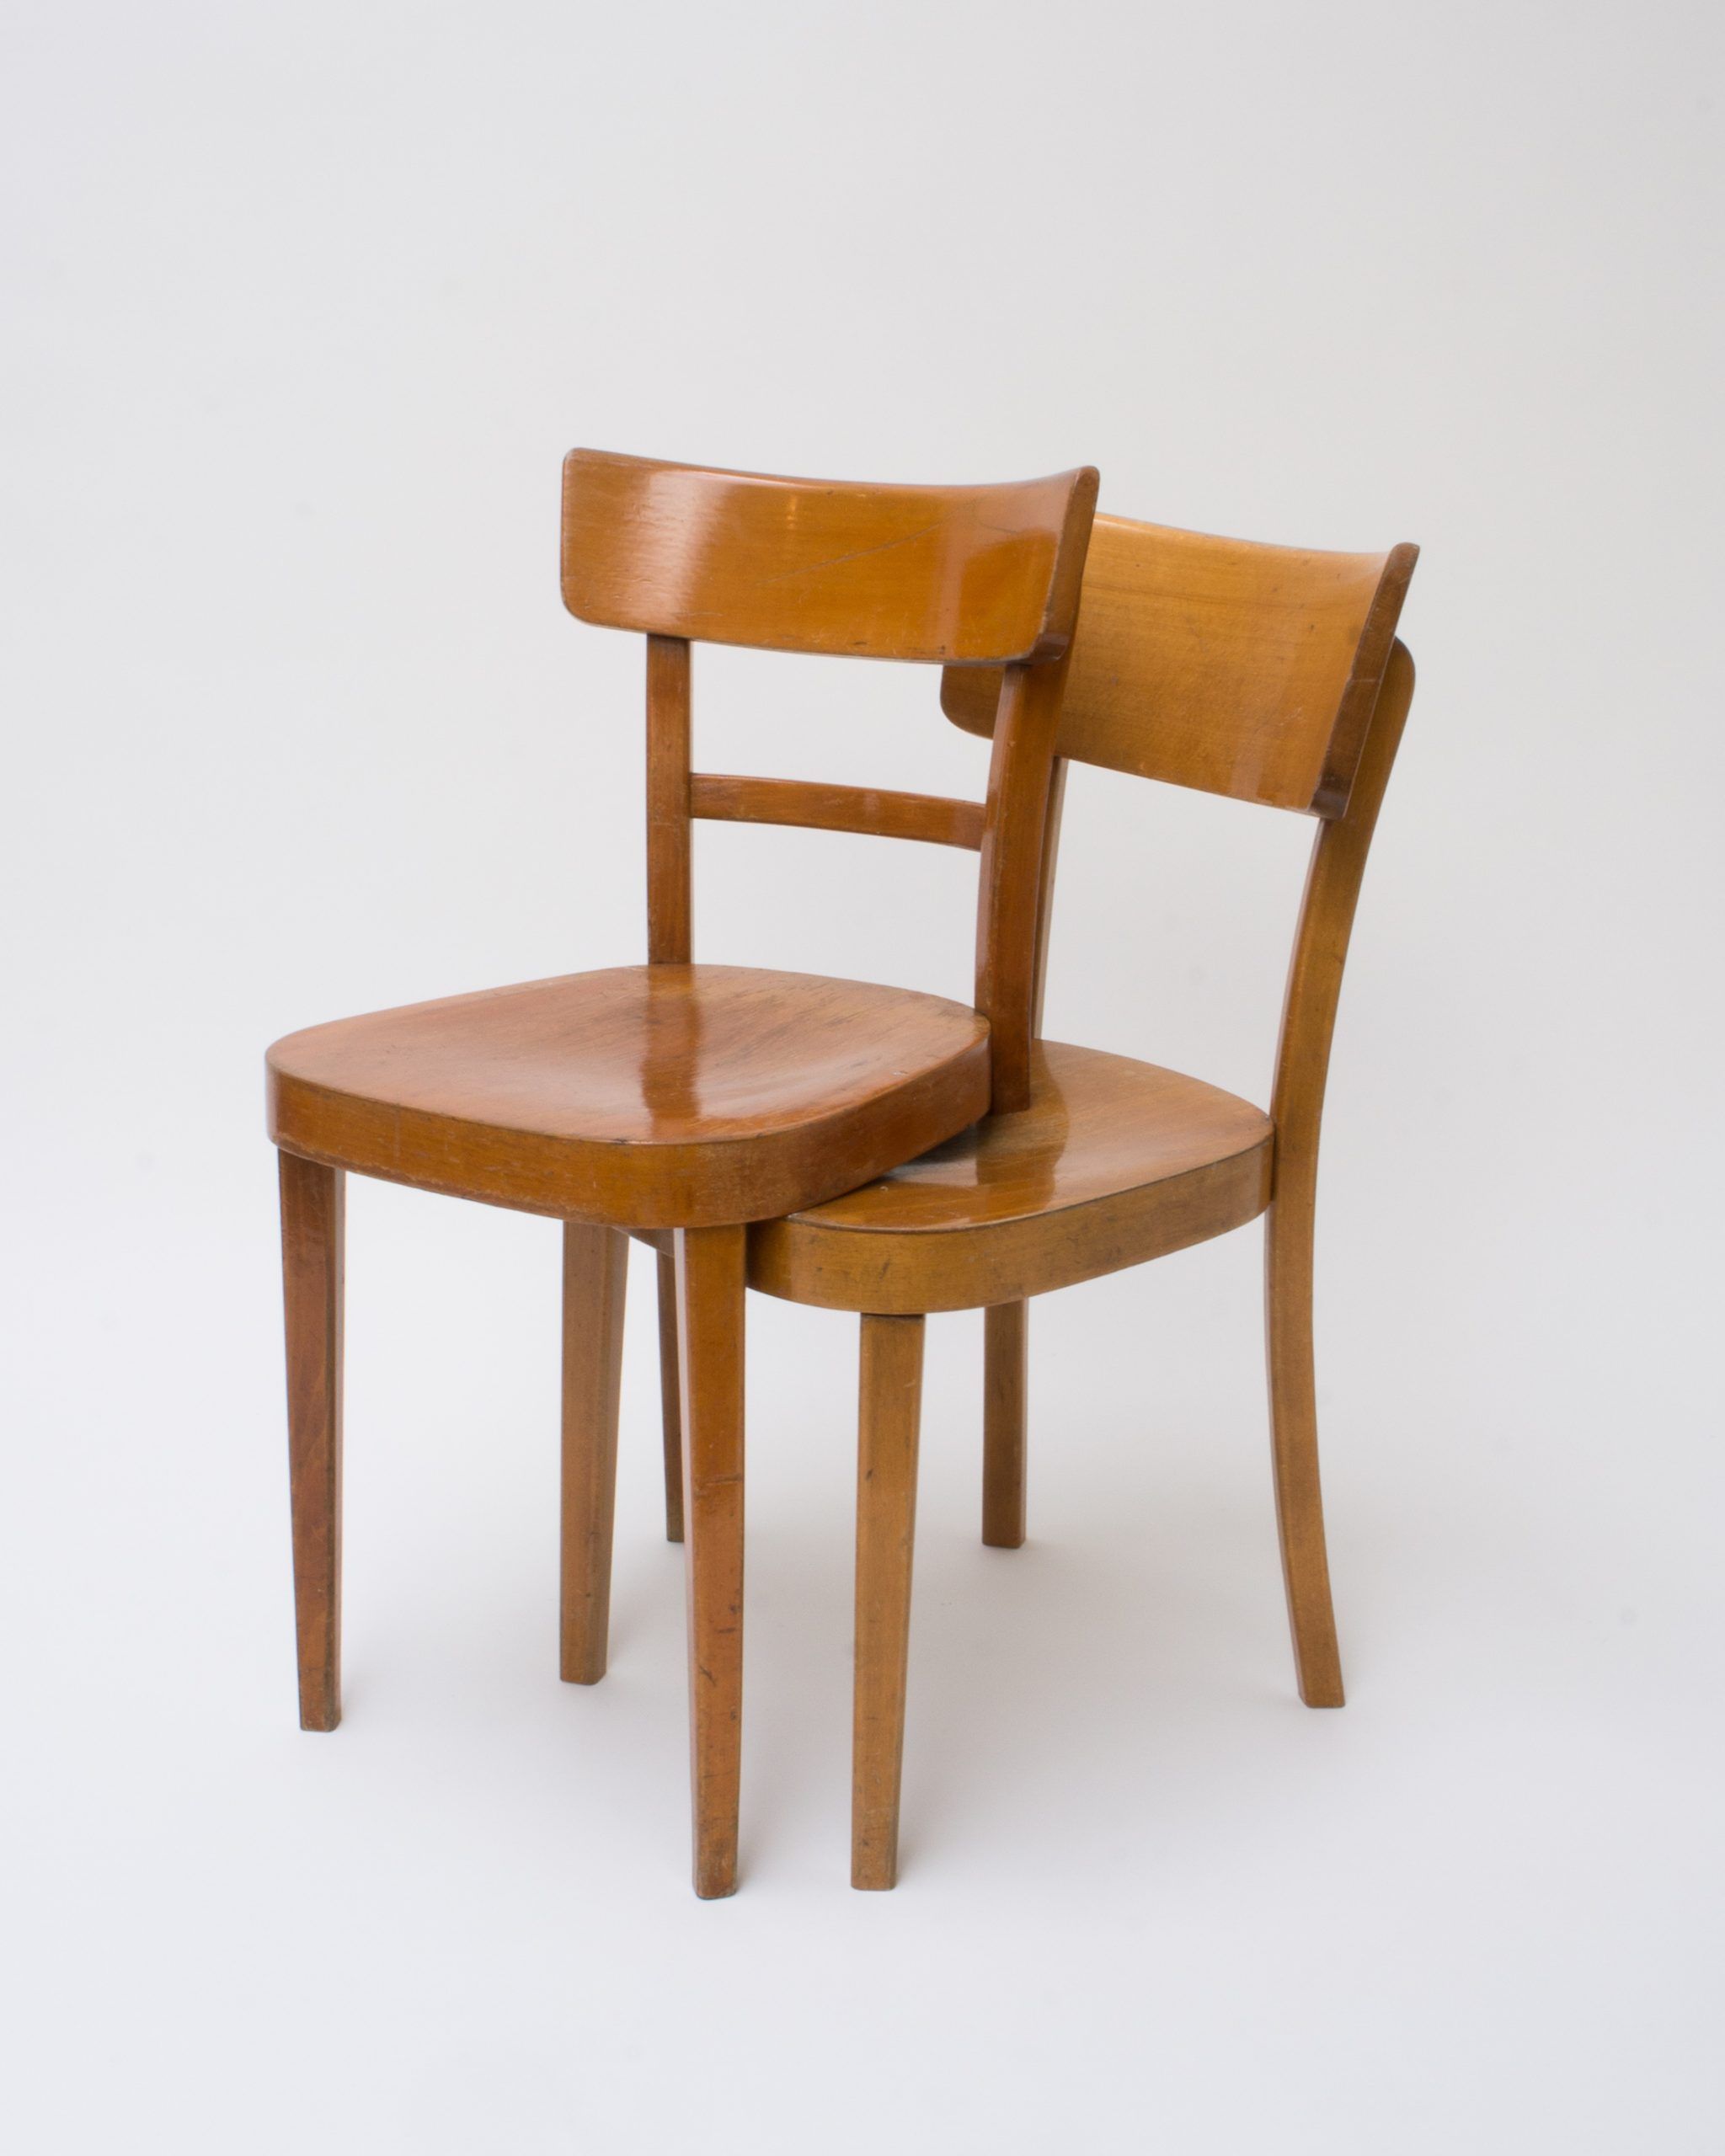 © Rolf Sachs 'Doppel Stuhl / Double Chair' courtesy ammann//gallery